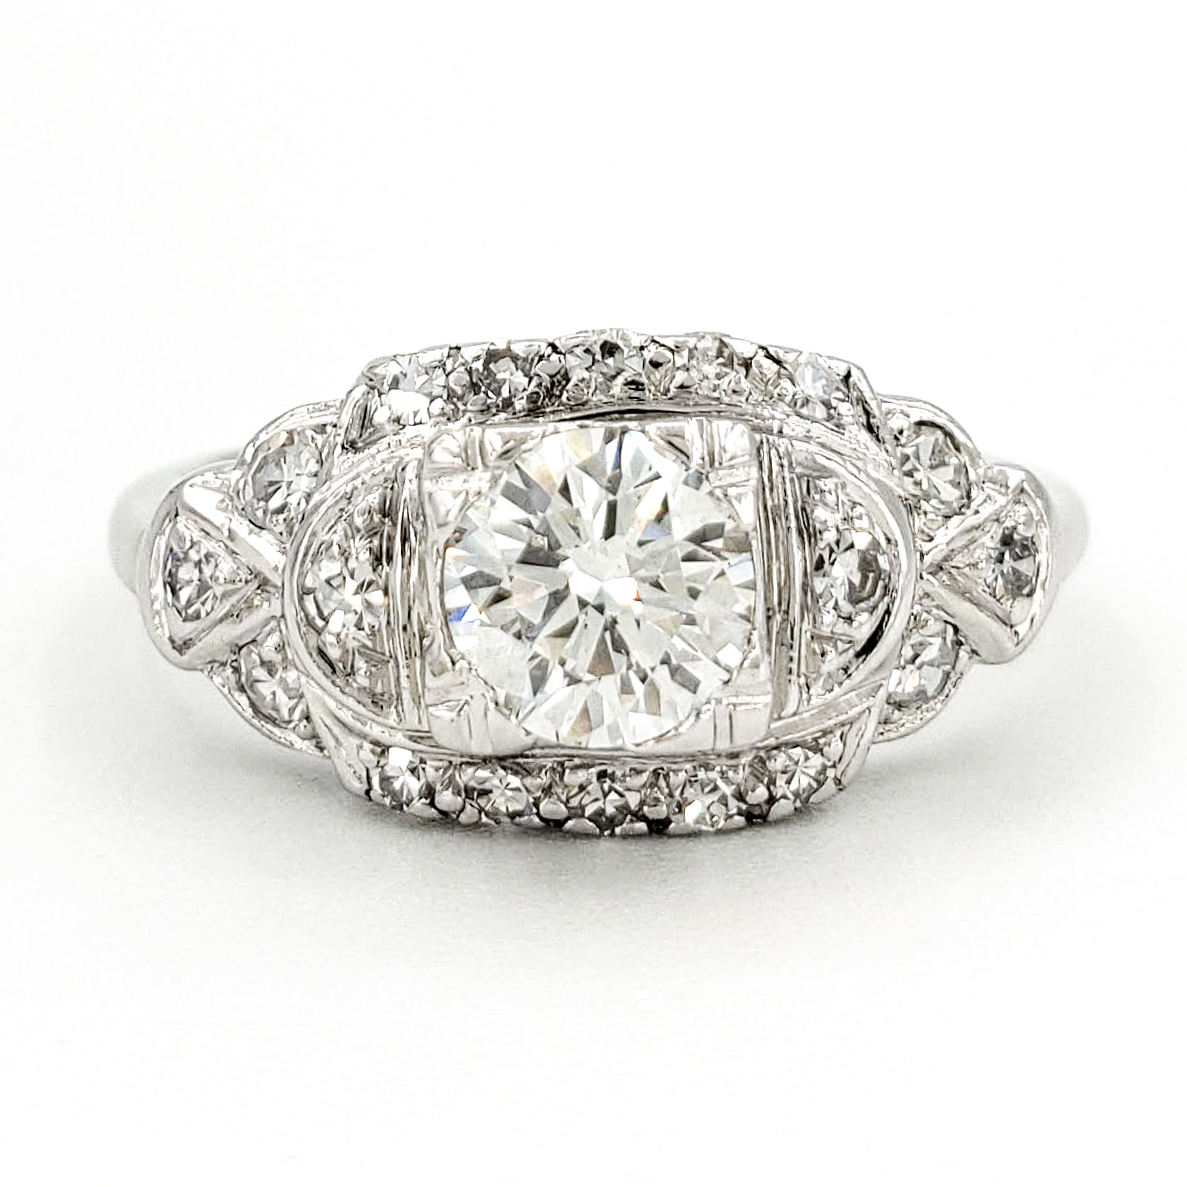 vintage-platinum-engagement-ring-with-0-55-carat-round-brilliant-cut-diamond-gia-g-si1